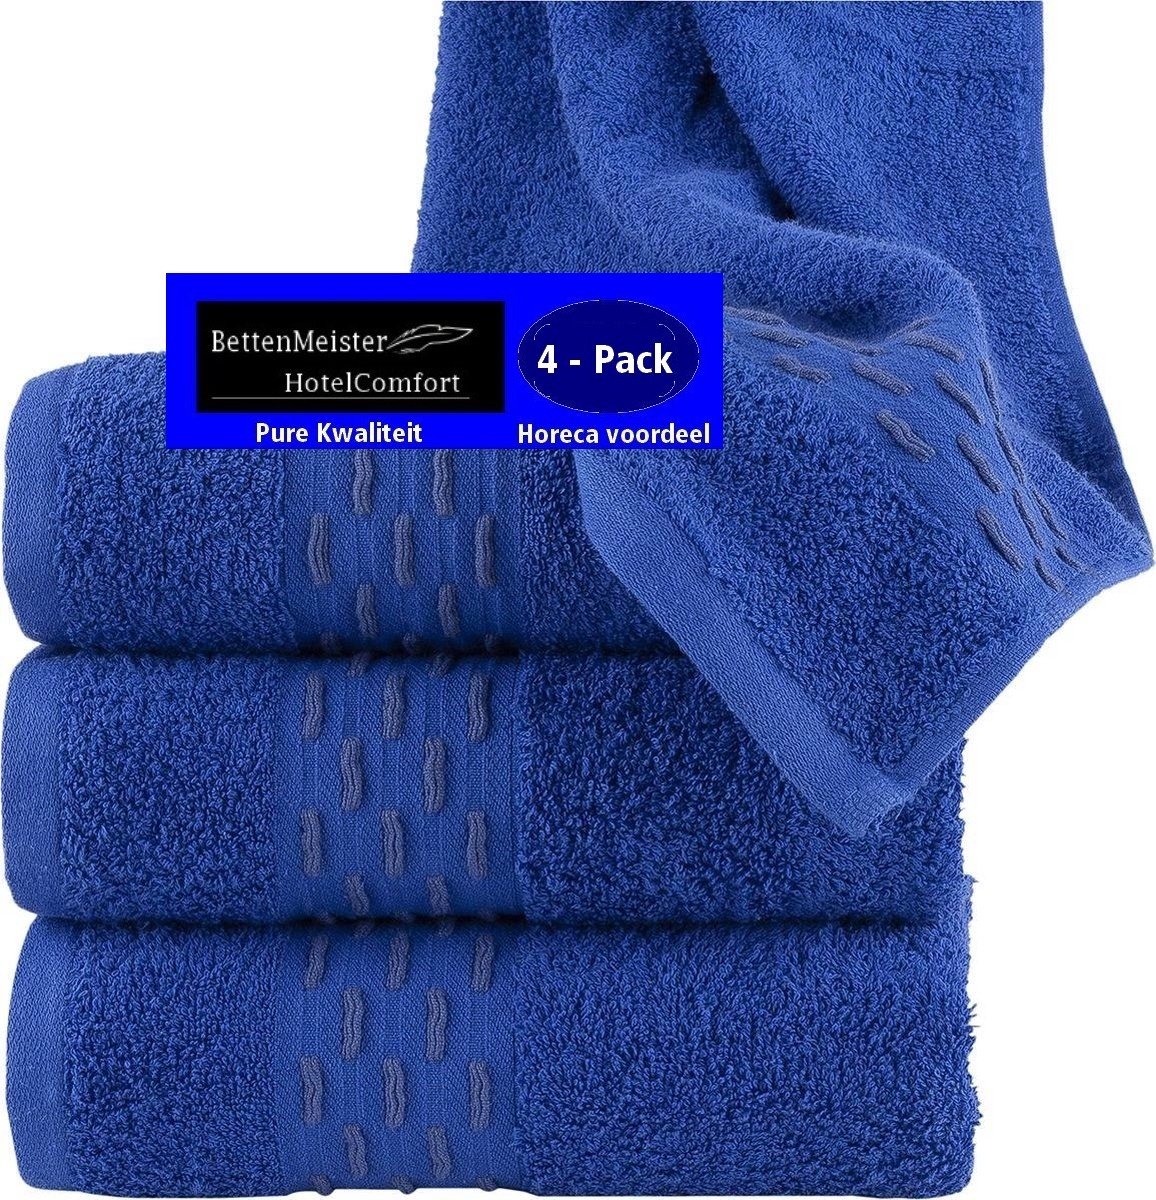 4 Pack Handdoeken - (4 stuks) golf jacquard royal blauw 50x100 cm - Katoen badstof